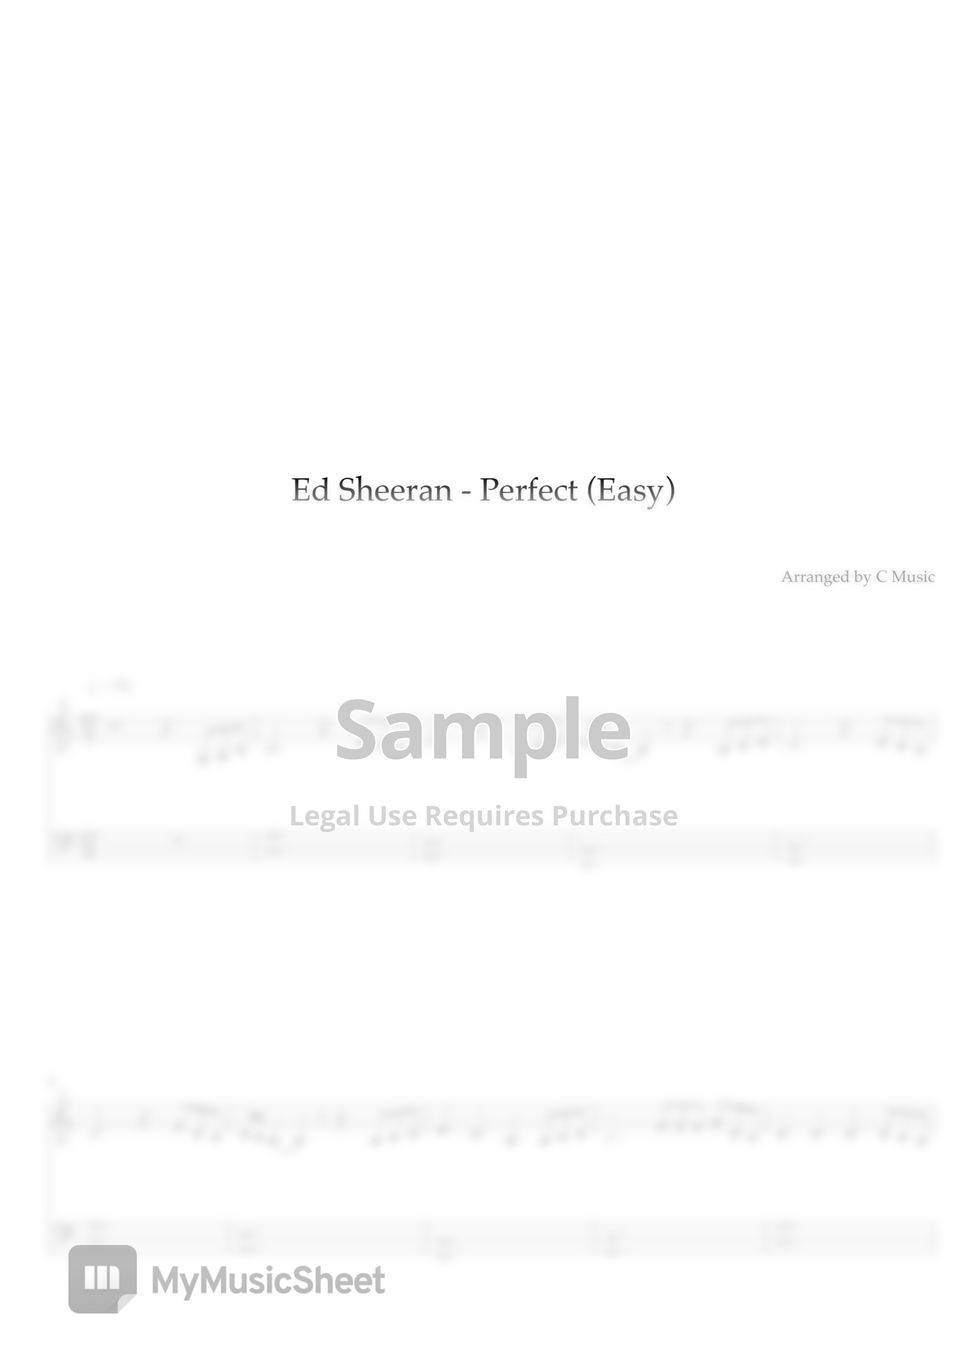 Ed Sheeran - Perfect (Easy) by C Music